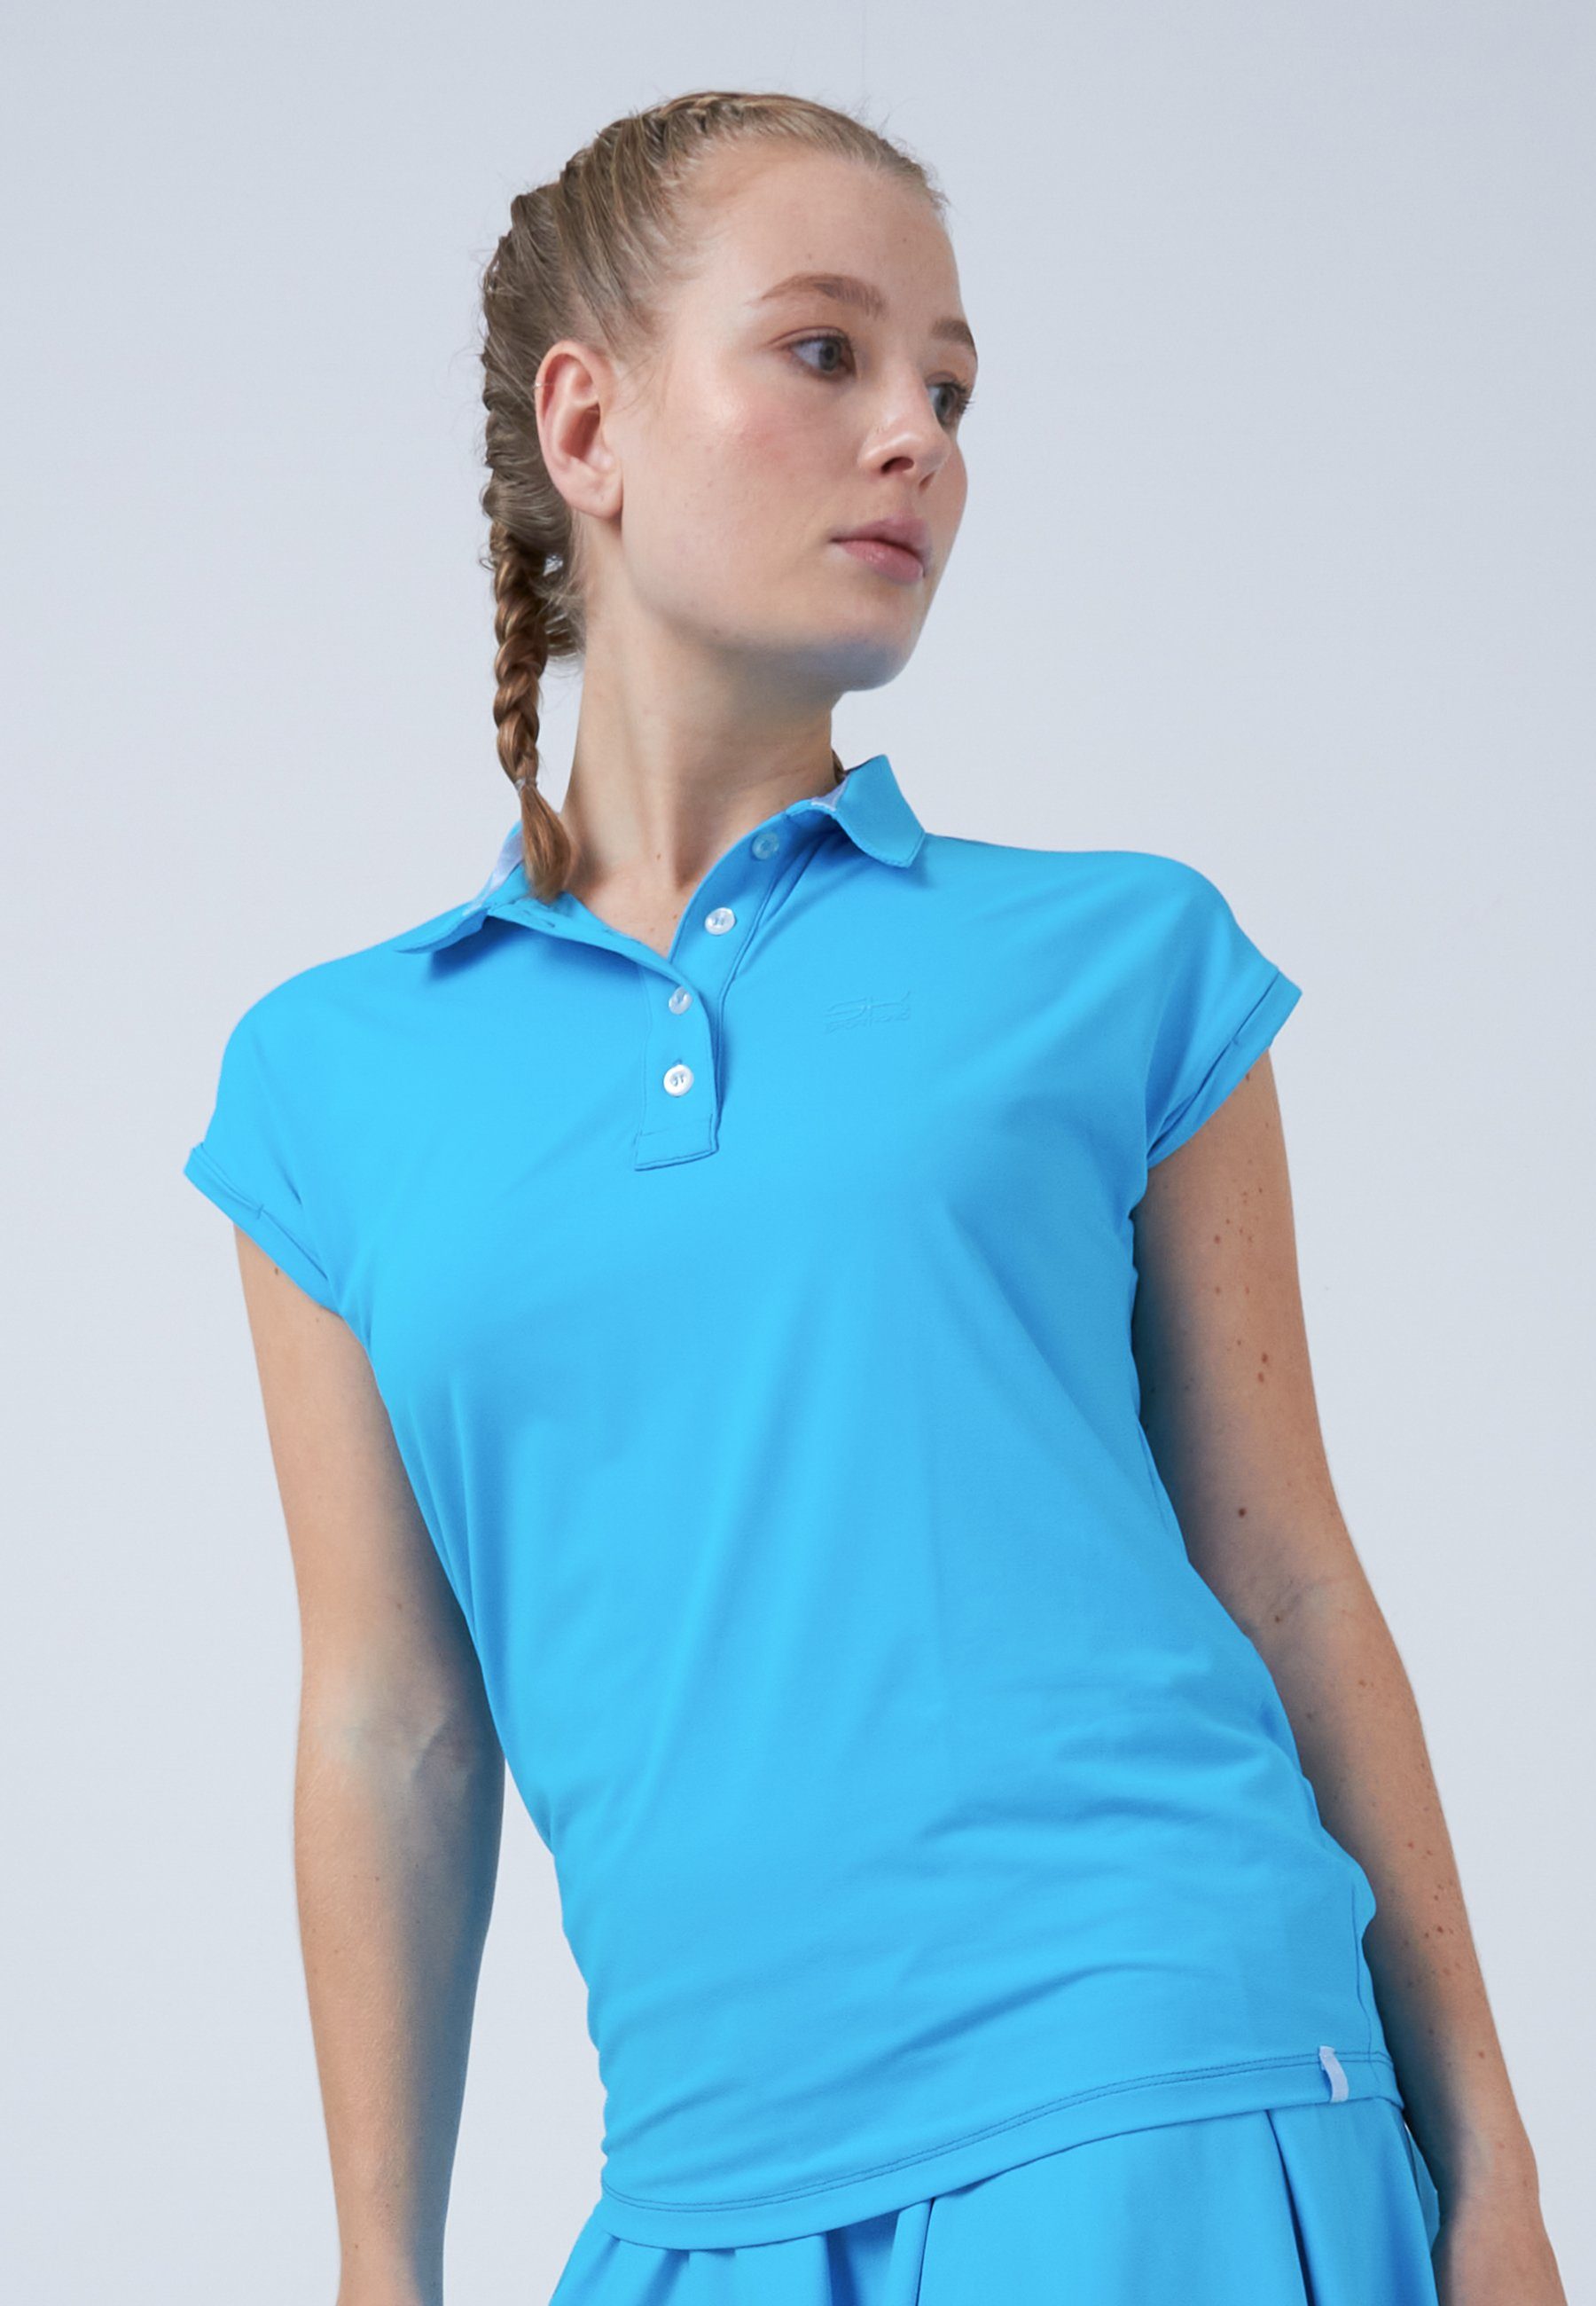 & Funktionsshirt Mädchen Golf SPORTKIND Shirt Damen Loose-Fit hellblau Polo